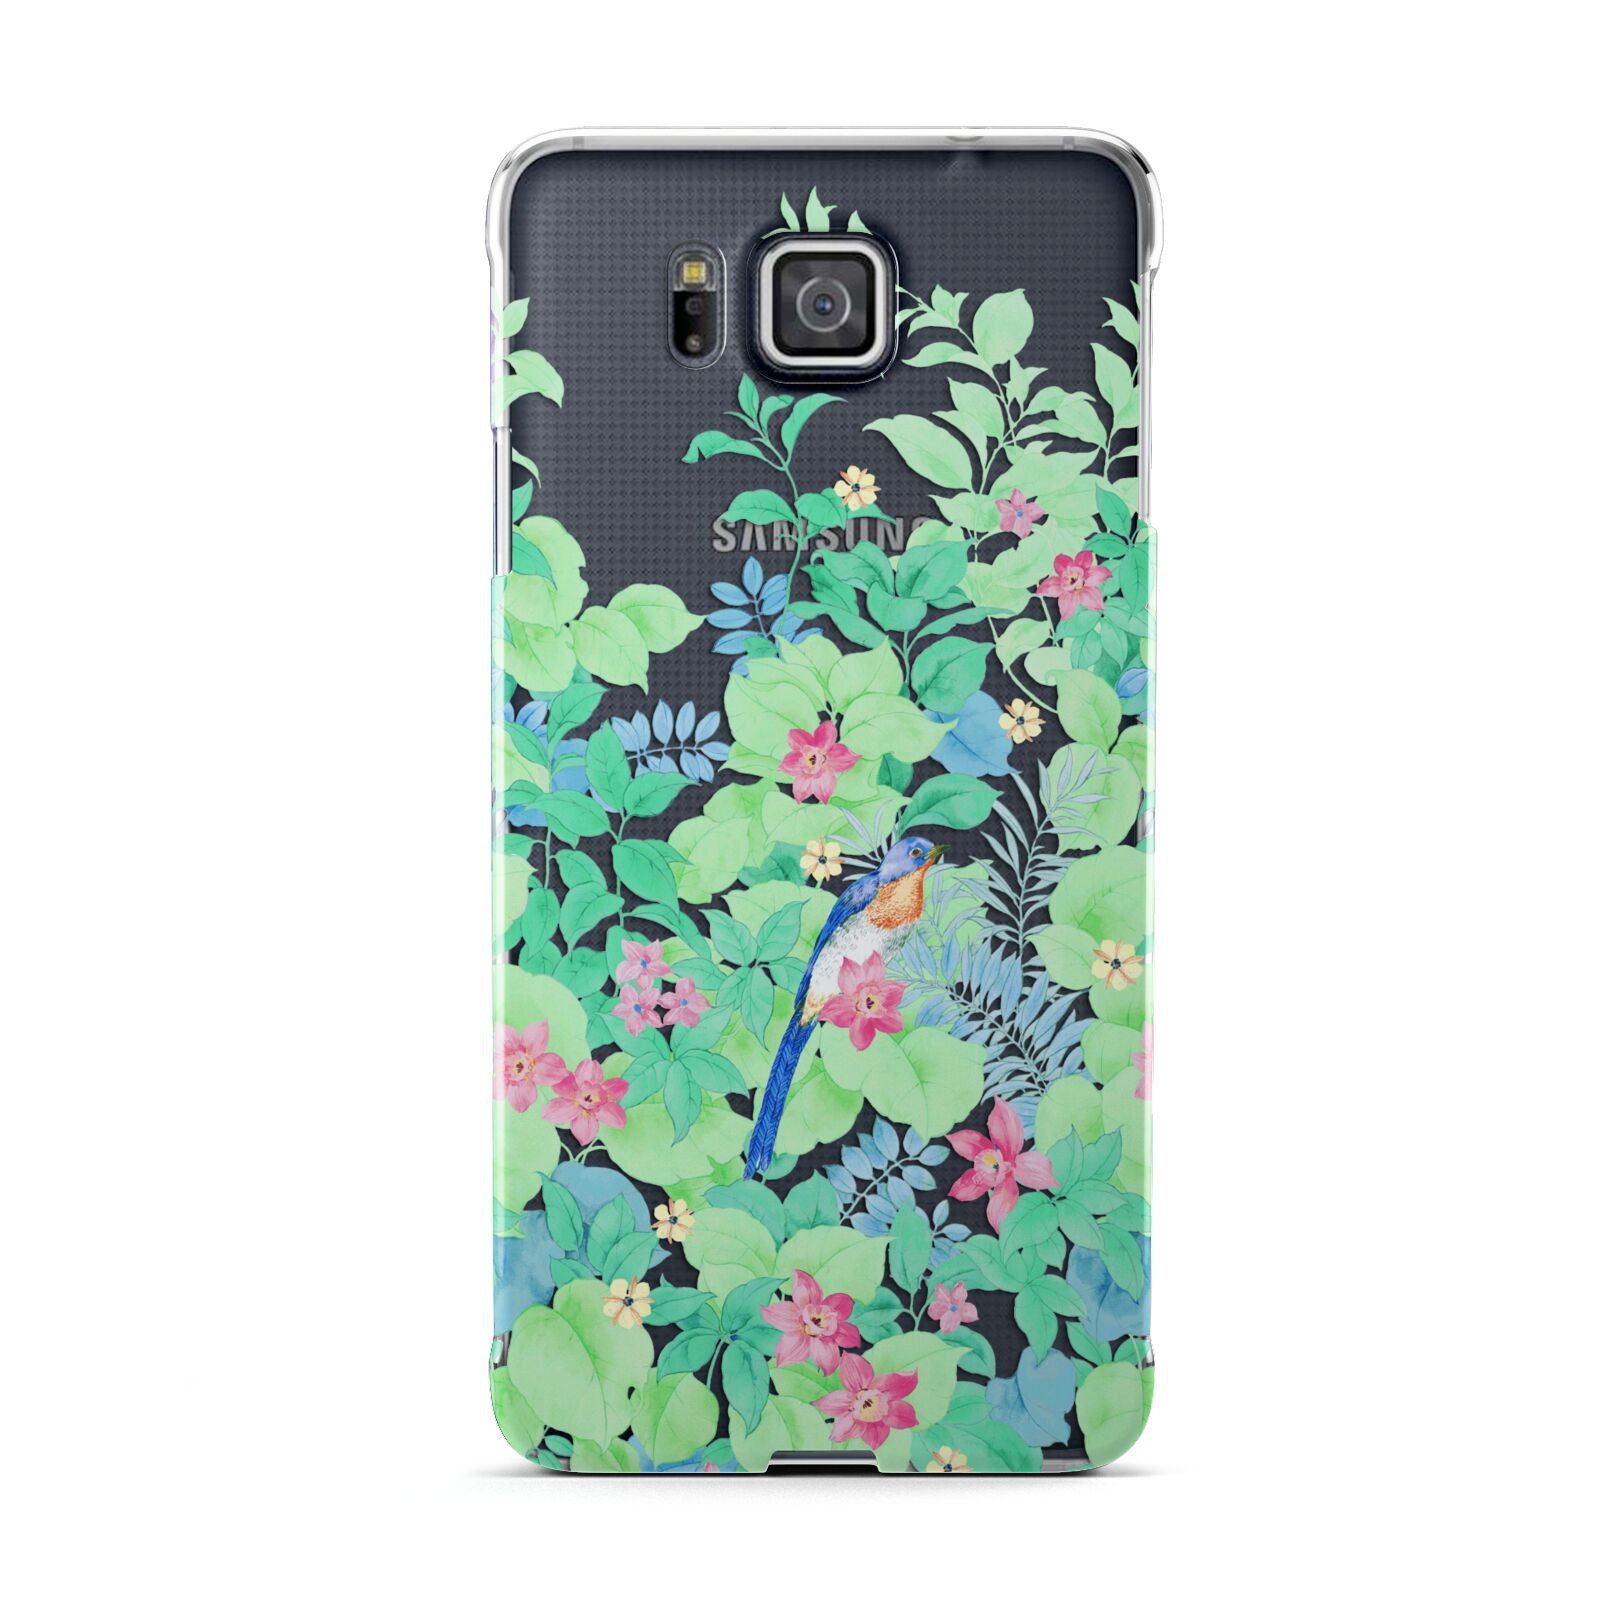 Watercolour Floral Samsung Galaxy Alpha Case